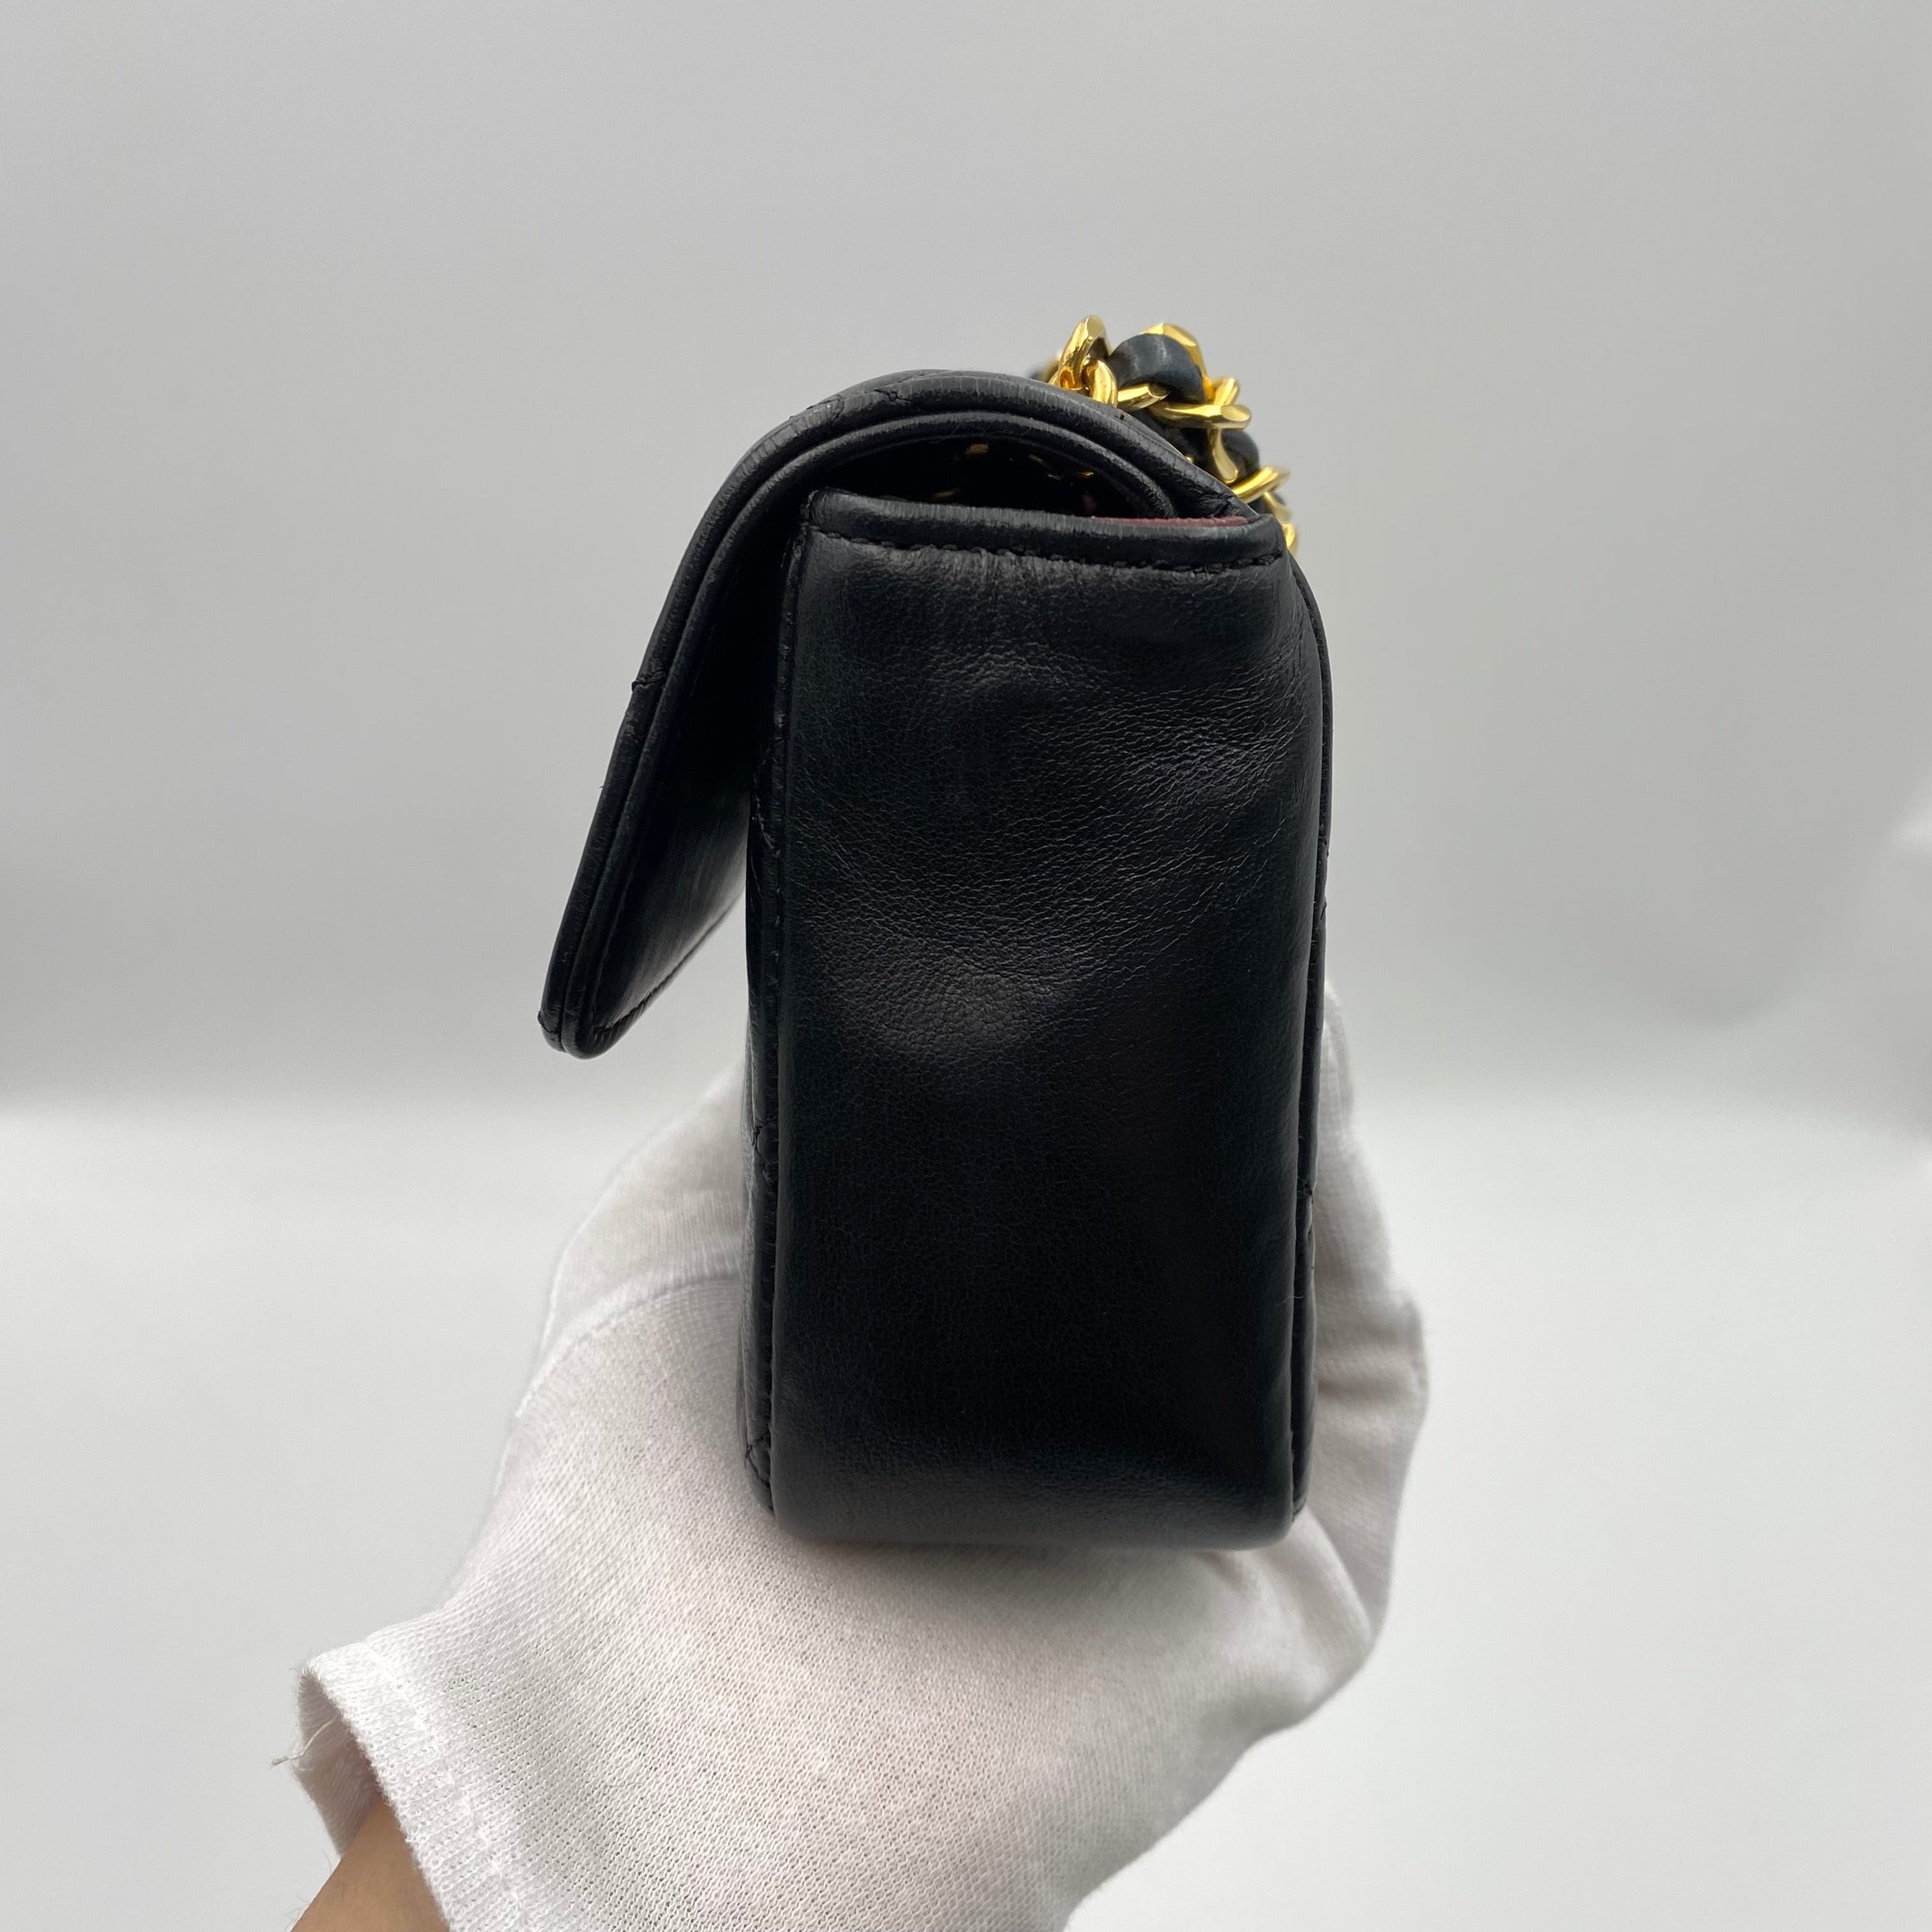 Chanel CHANEL VINTAGE MINI MATELASSE CHAIN SHOULDER BAG BLACK LAMB SKIN